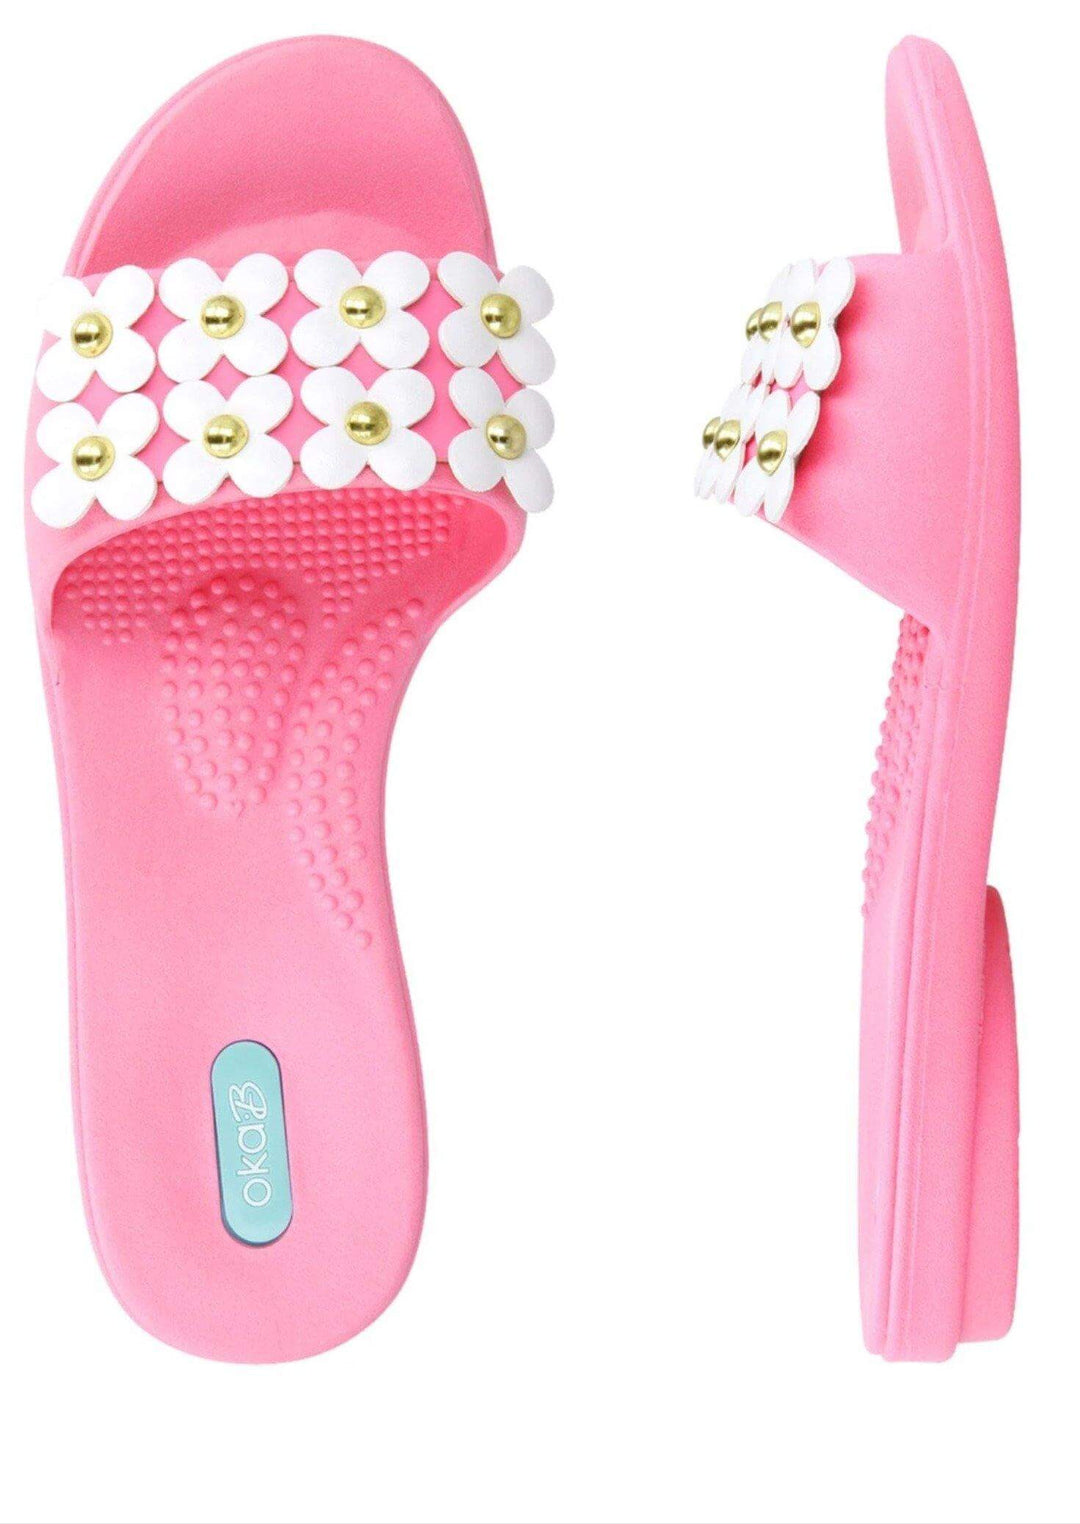 Brand: Oka-B - Oka-B Sedona Flower Detail Pink Sandal Slides -  Beach Wear, Featured, Flip Flops, Flower, Made in America, made in usa, pink, Sandals, Sedona, Shoes made local, Slides, Spring, Summer, Women - Classy Cozy Cool Boutique